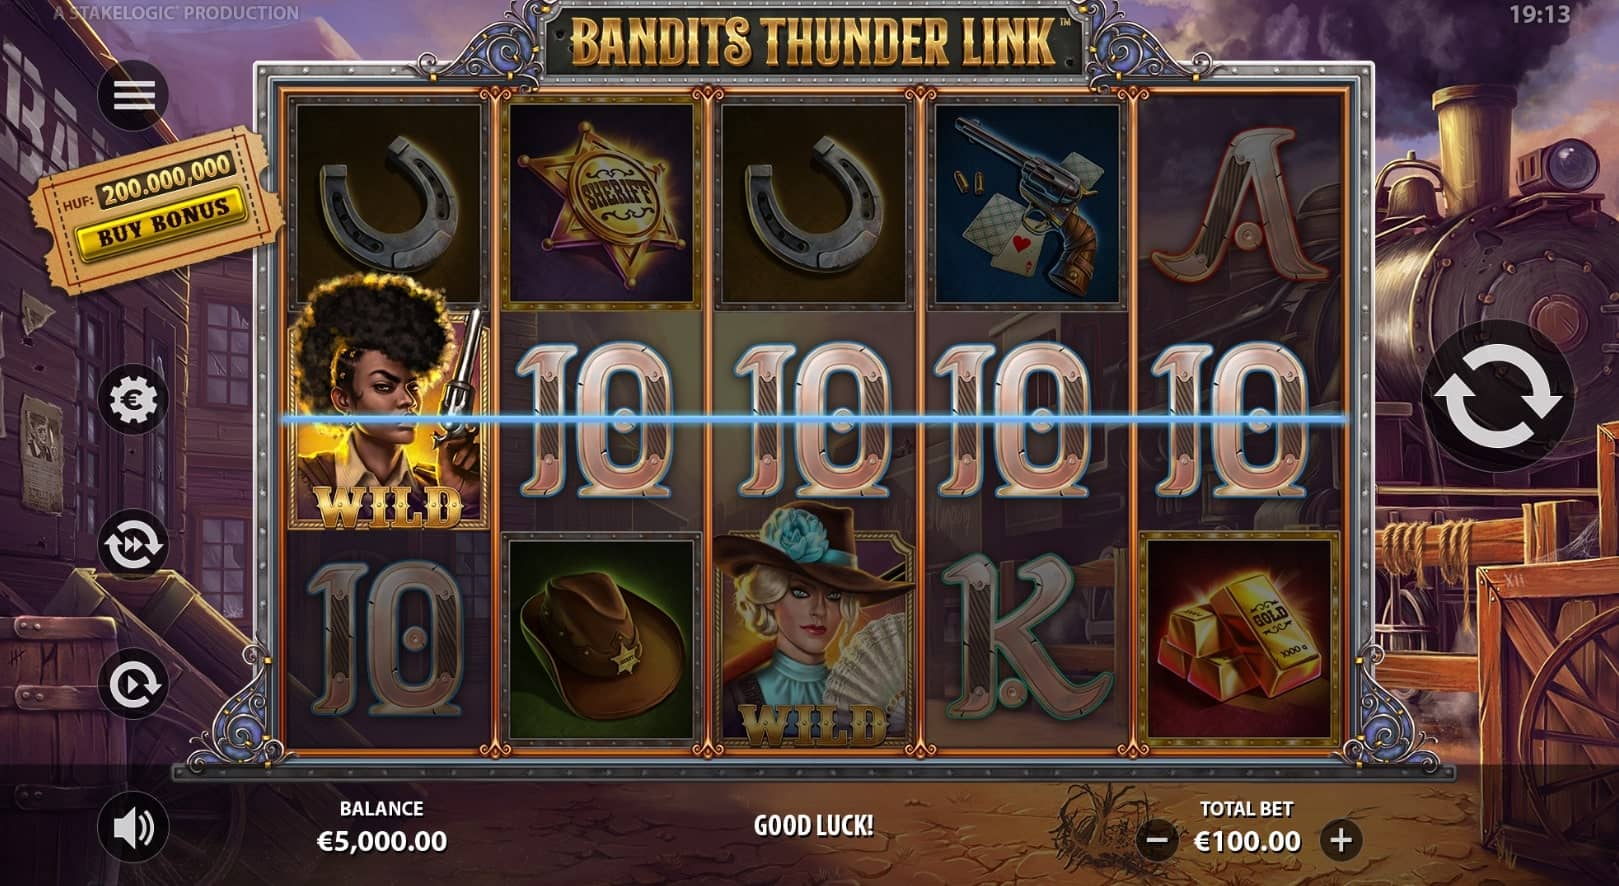 Bandits Thunder Link Base Game